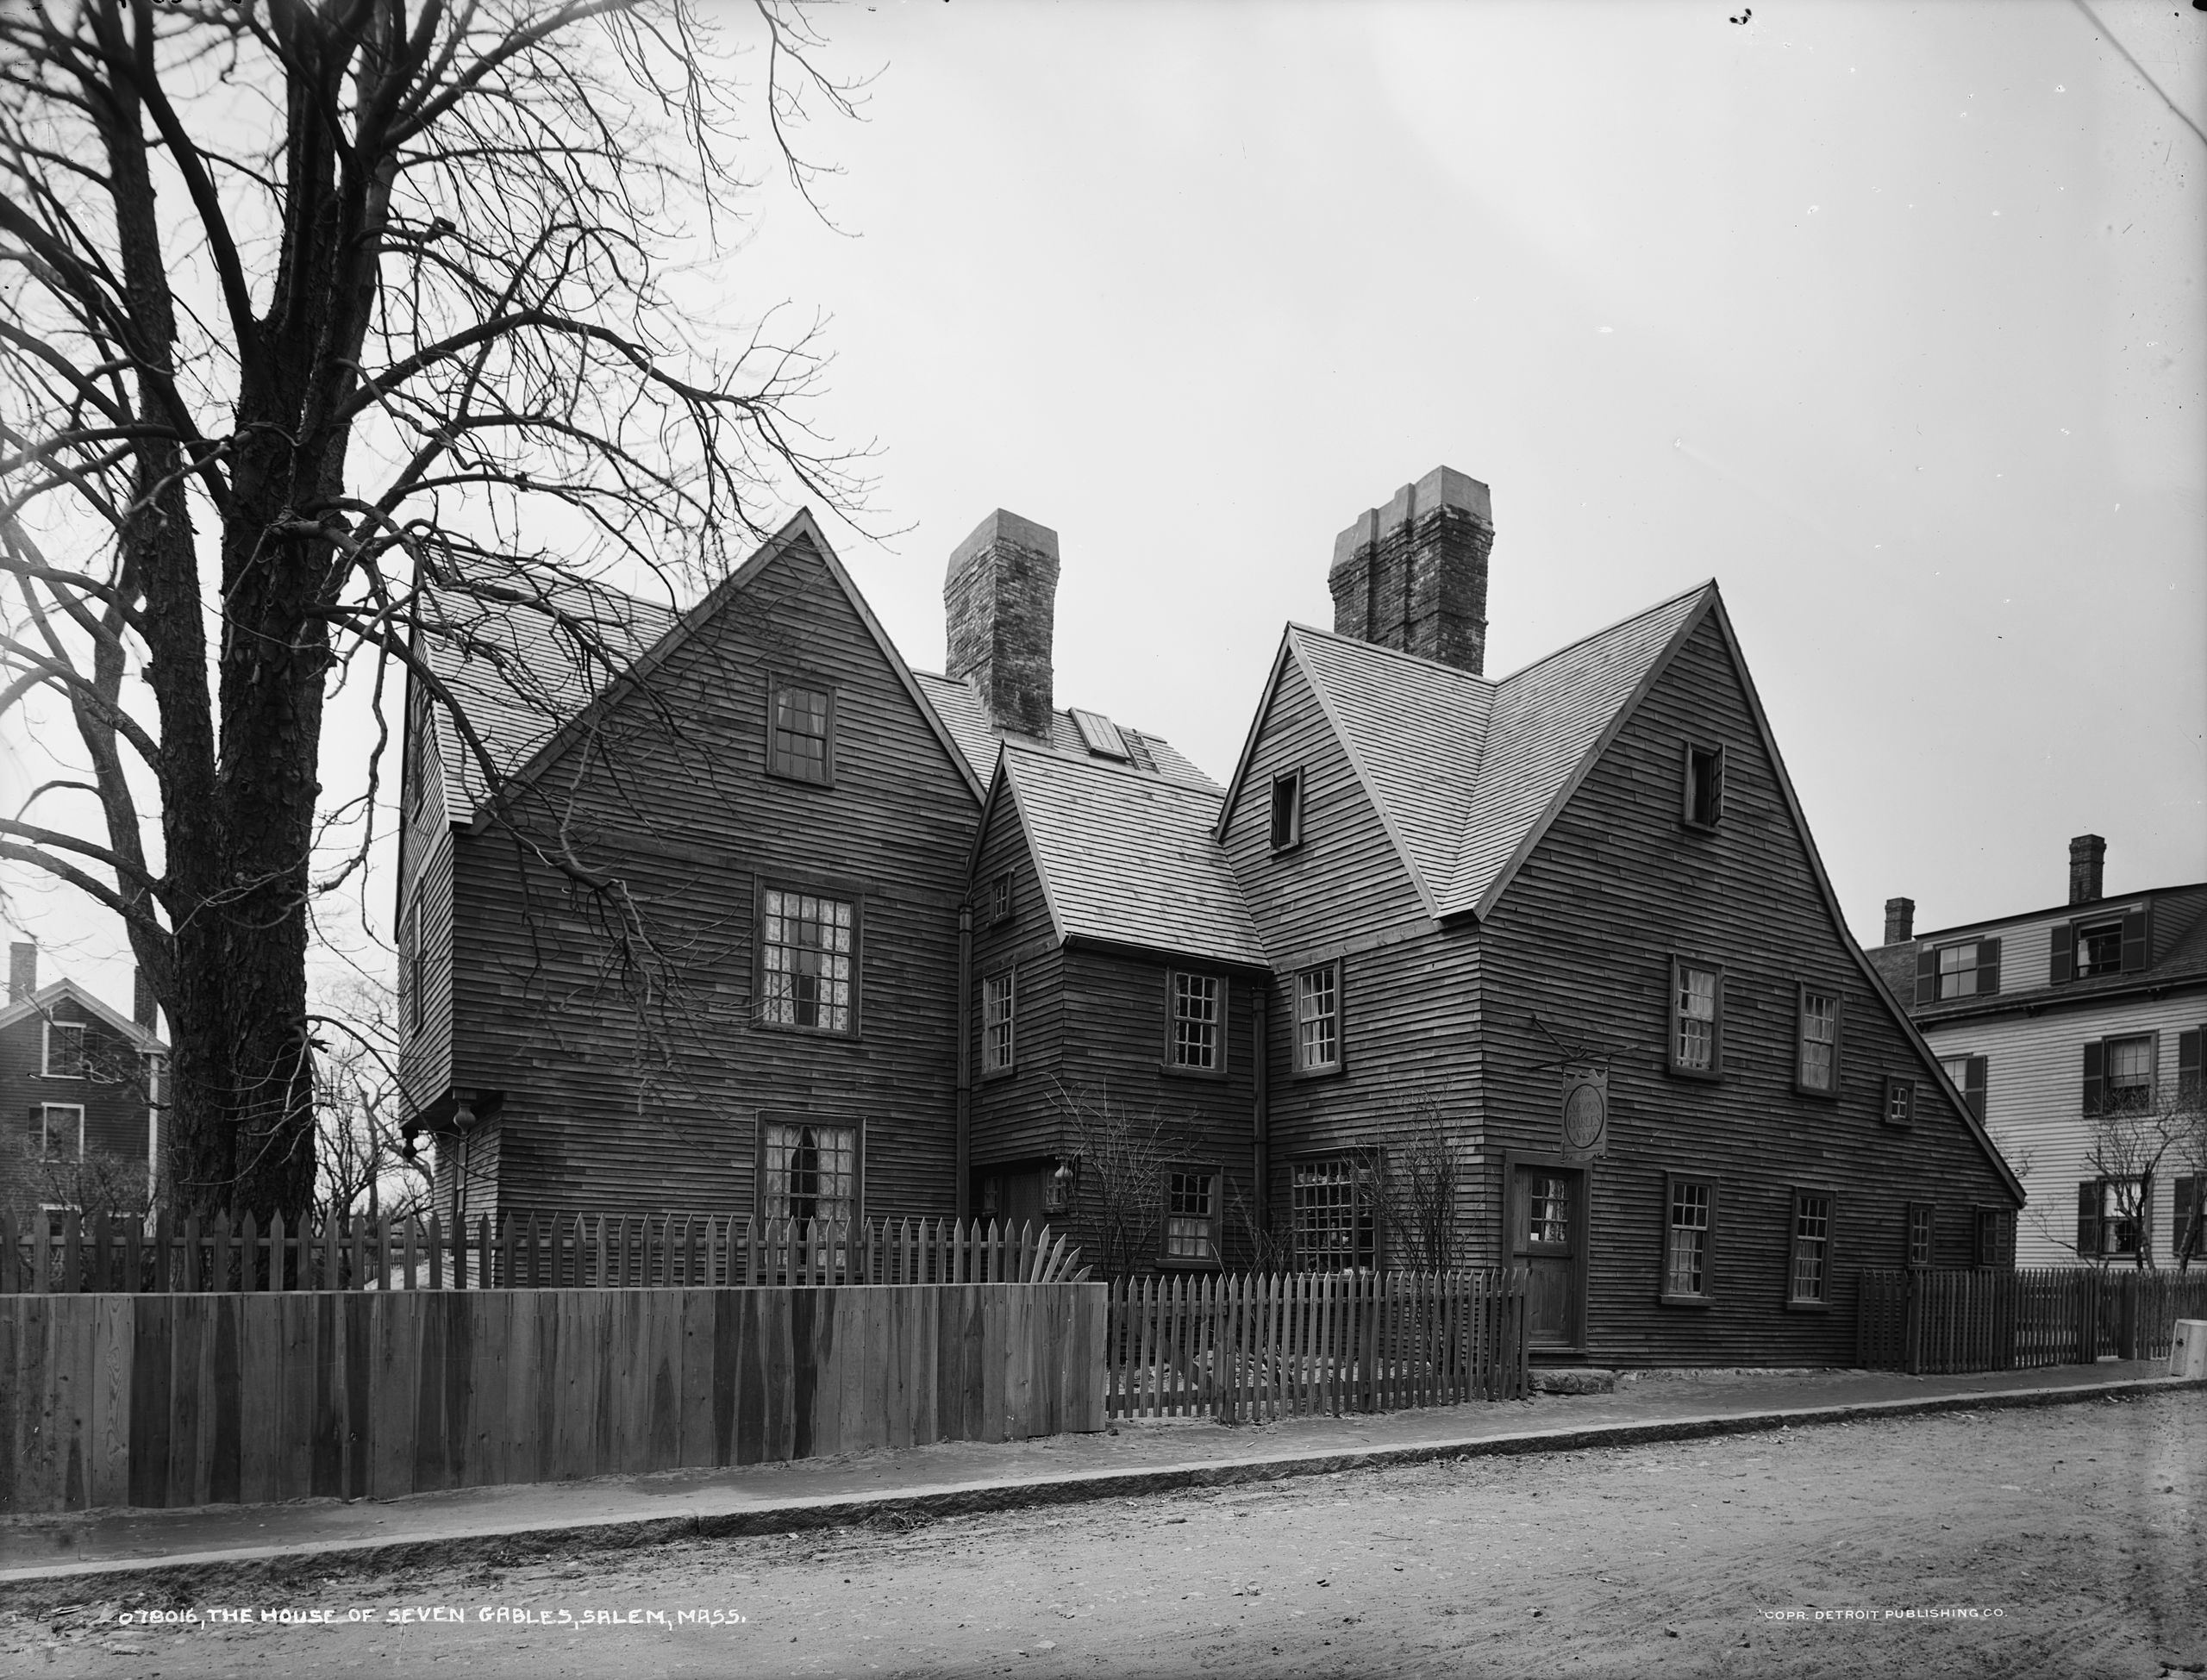 The House of the Seven Gables in Salem, Massachusetts, USA